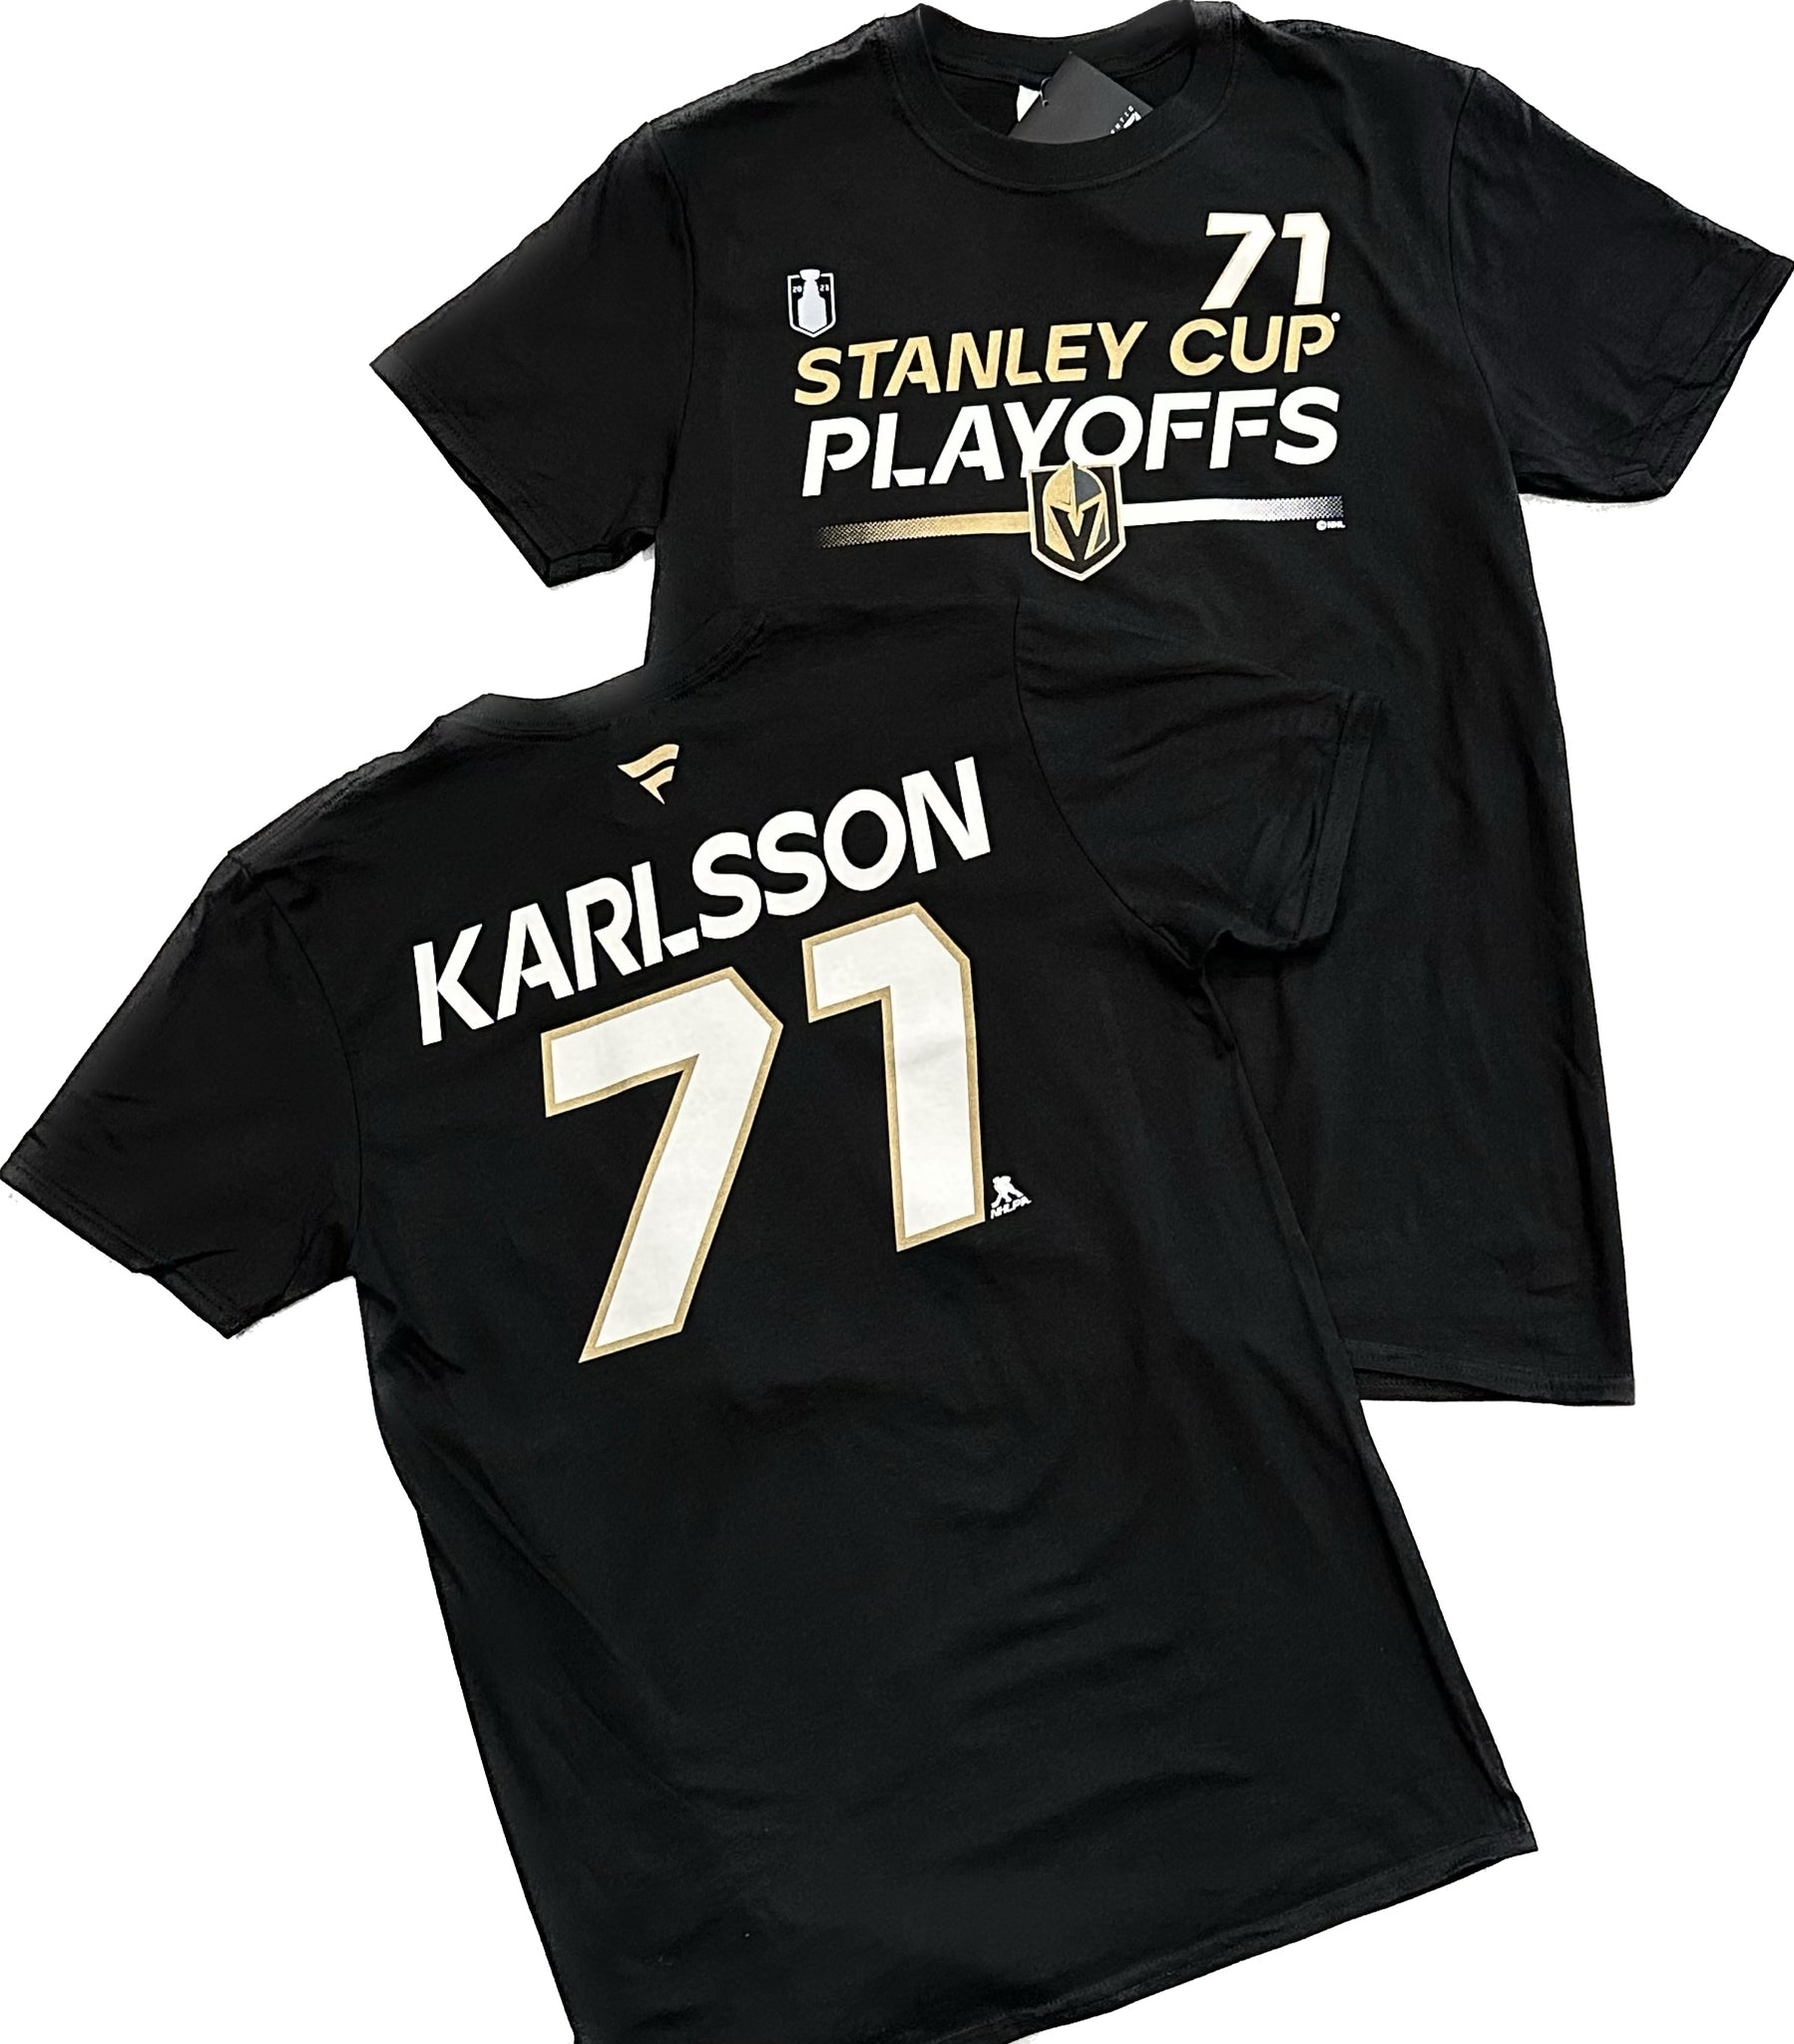 Vegas Golden Knights Karlsson #71 Playoff T-Shirt***